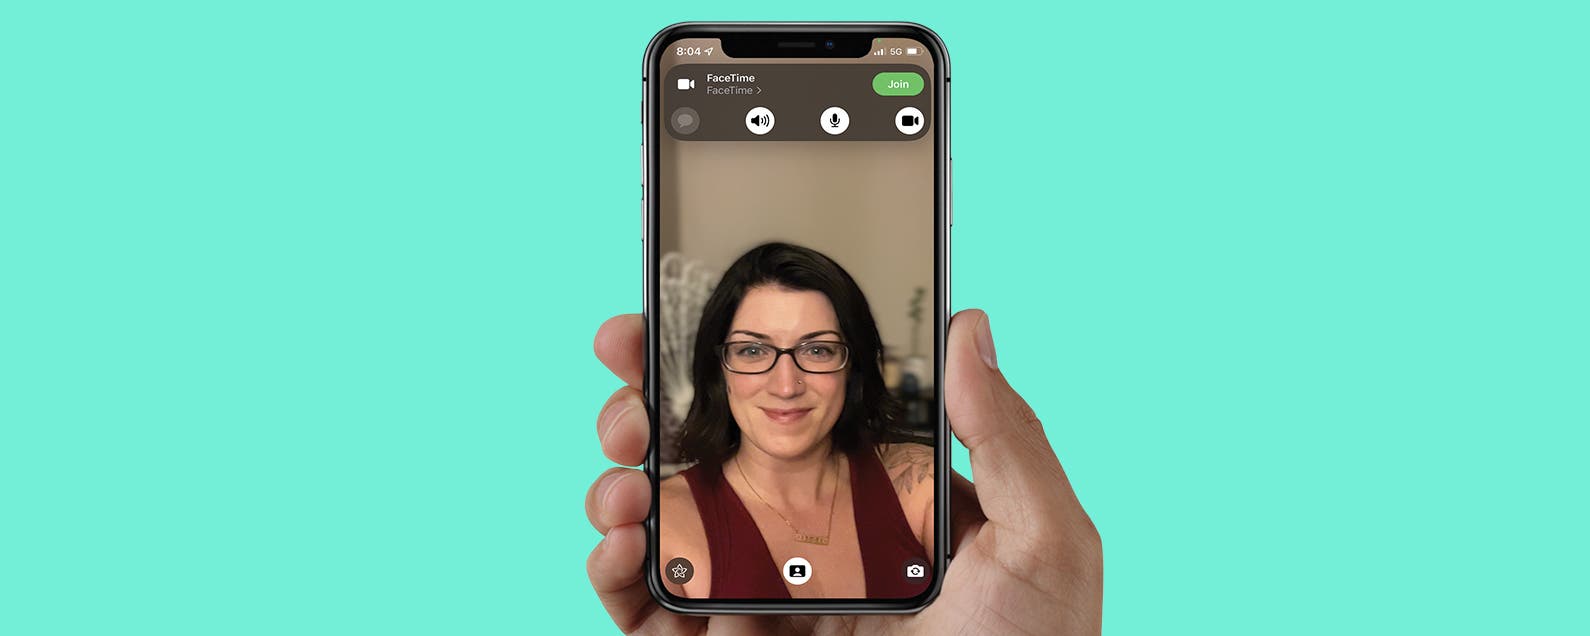 Cách Iphone facetime background blur Trên nền tảng iOS